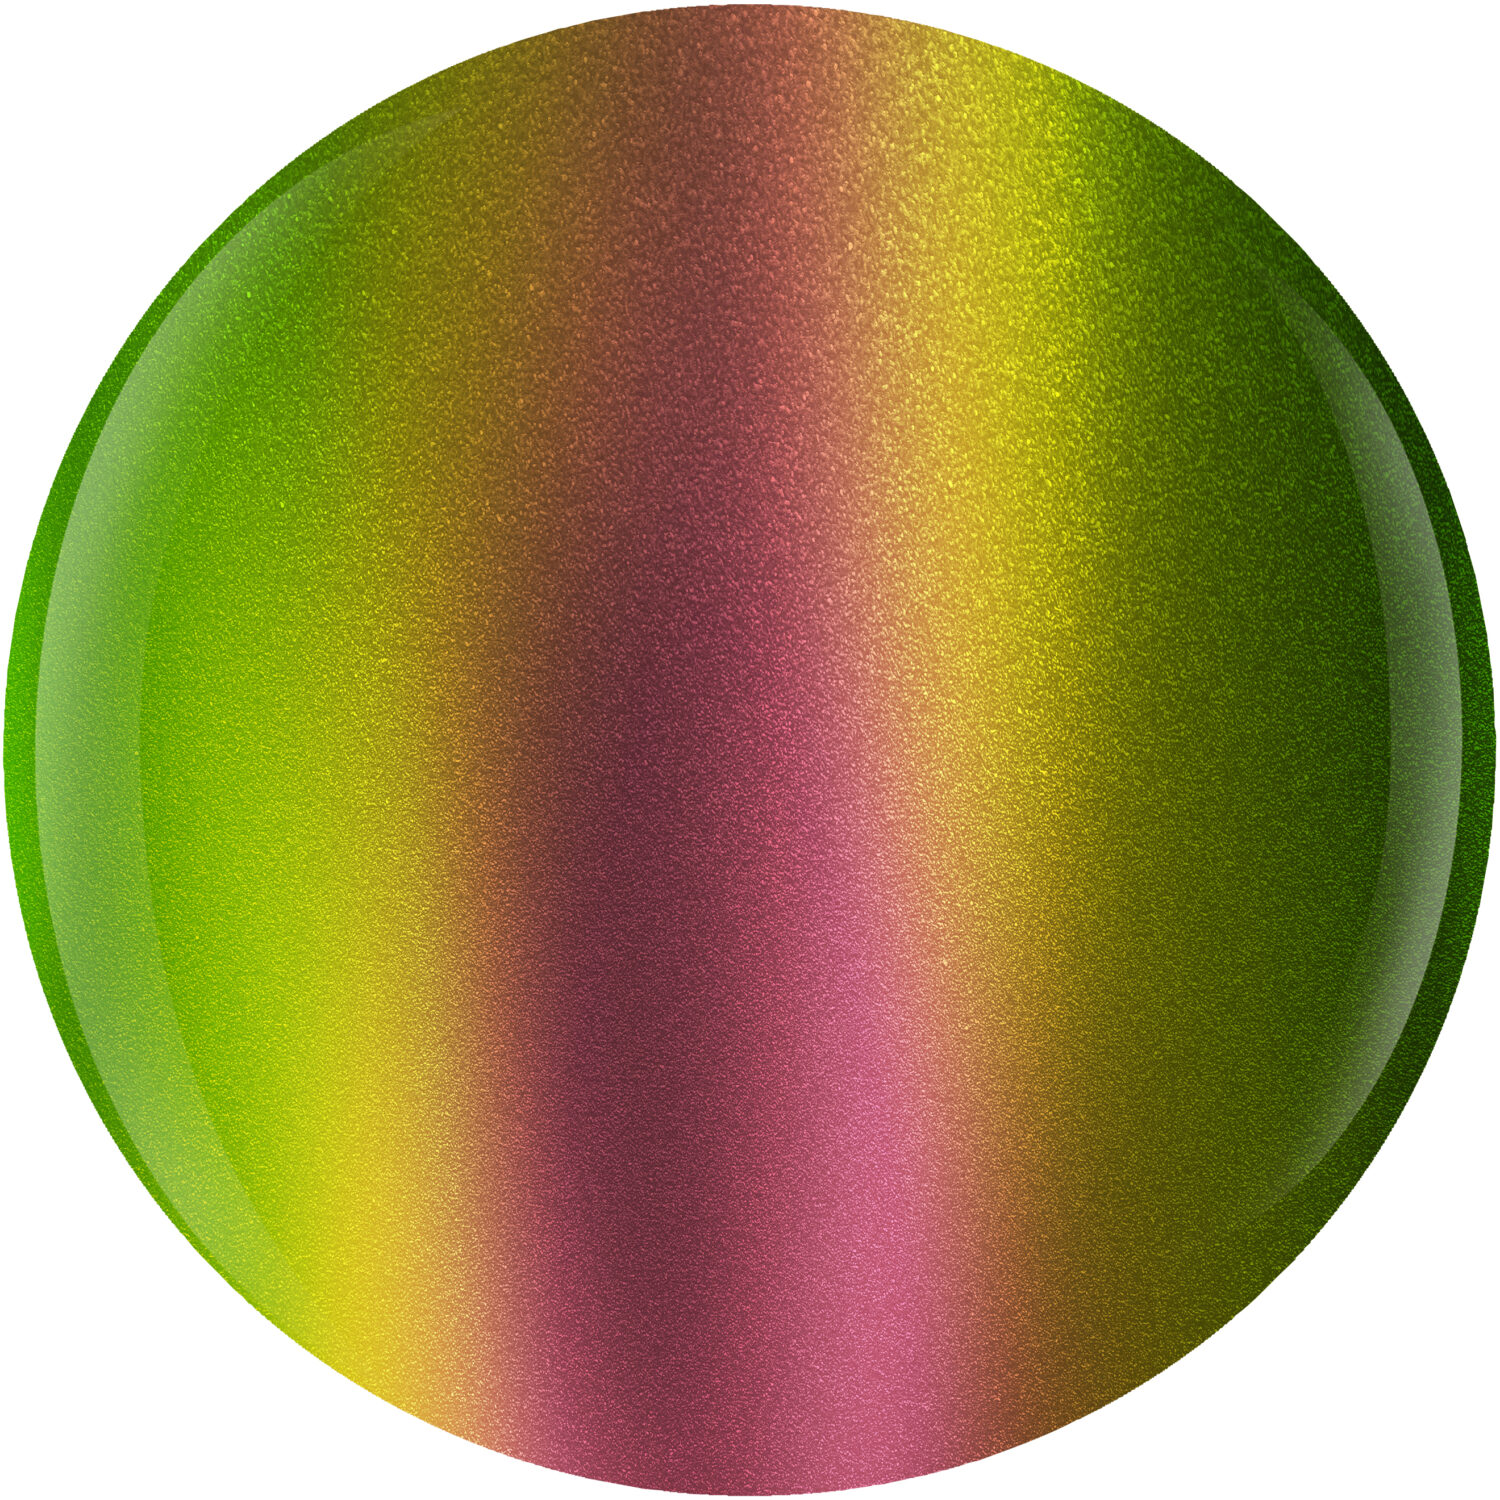 Gelish Chrome Stix Pink Opal, 0.17 oz.